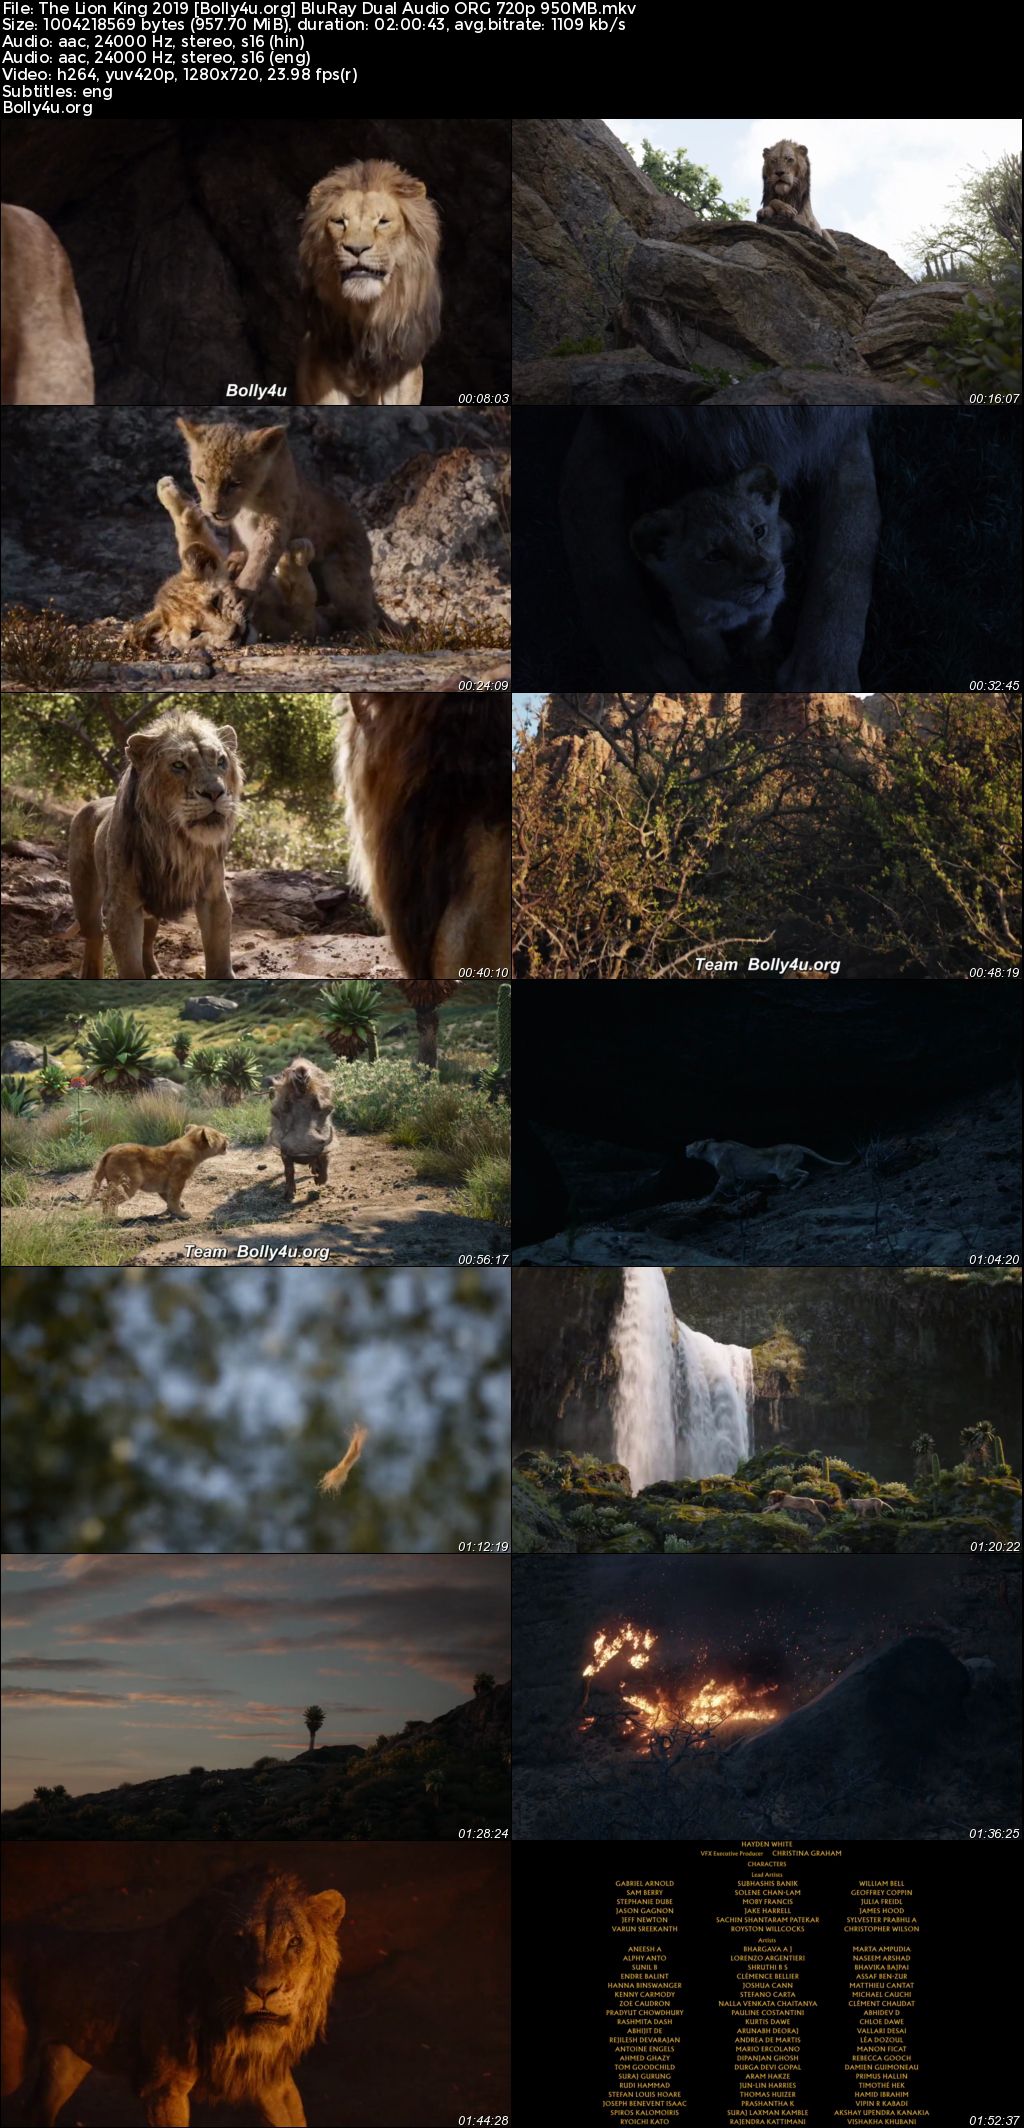 The Lion King 2019 BluRay Hindi Dual Audio ORG Full Movie Download 1080p 720p 480p